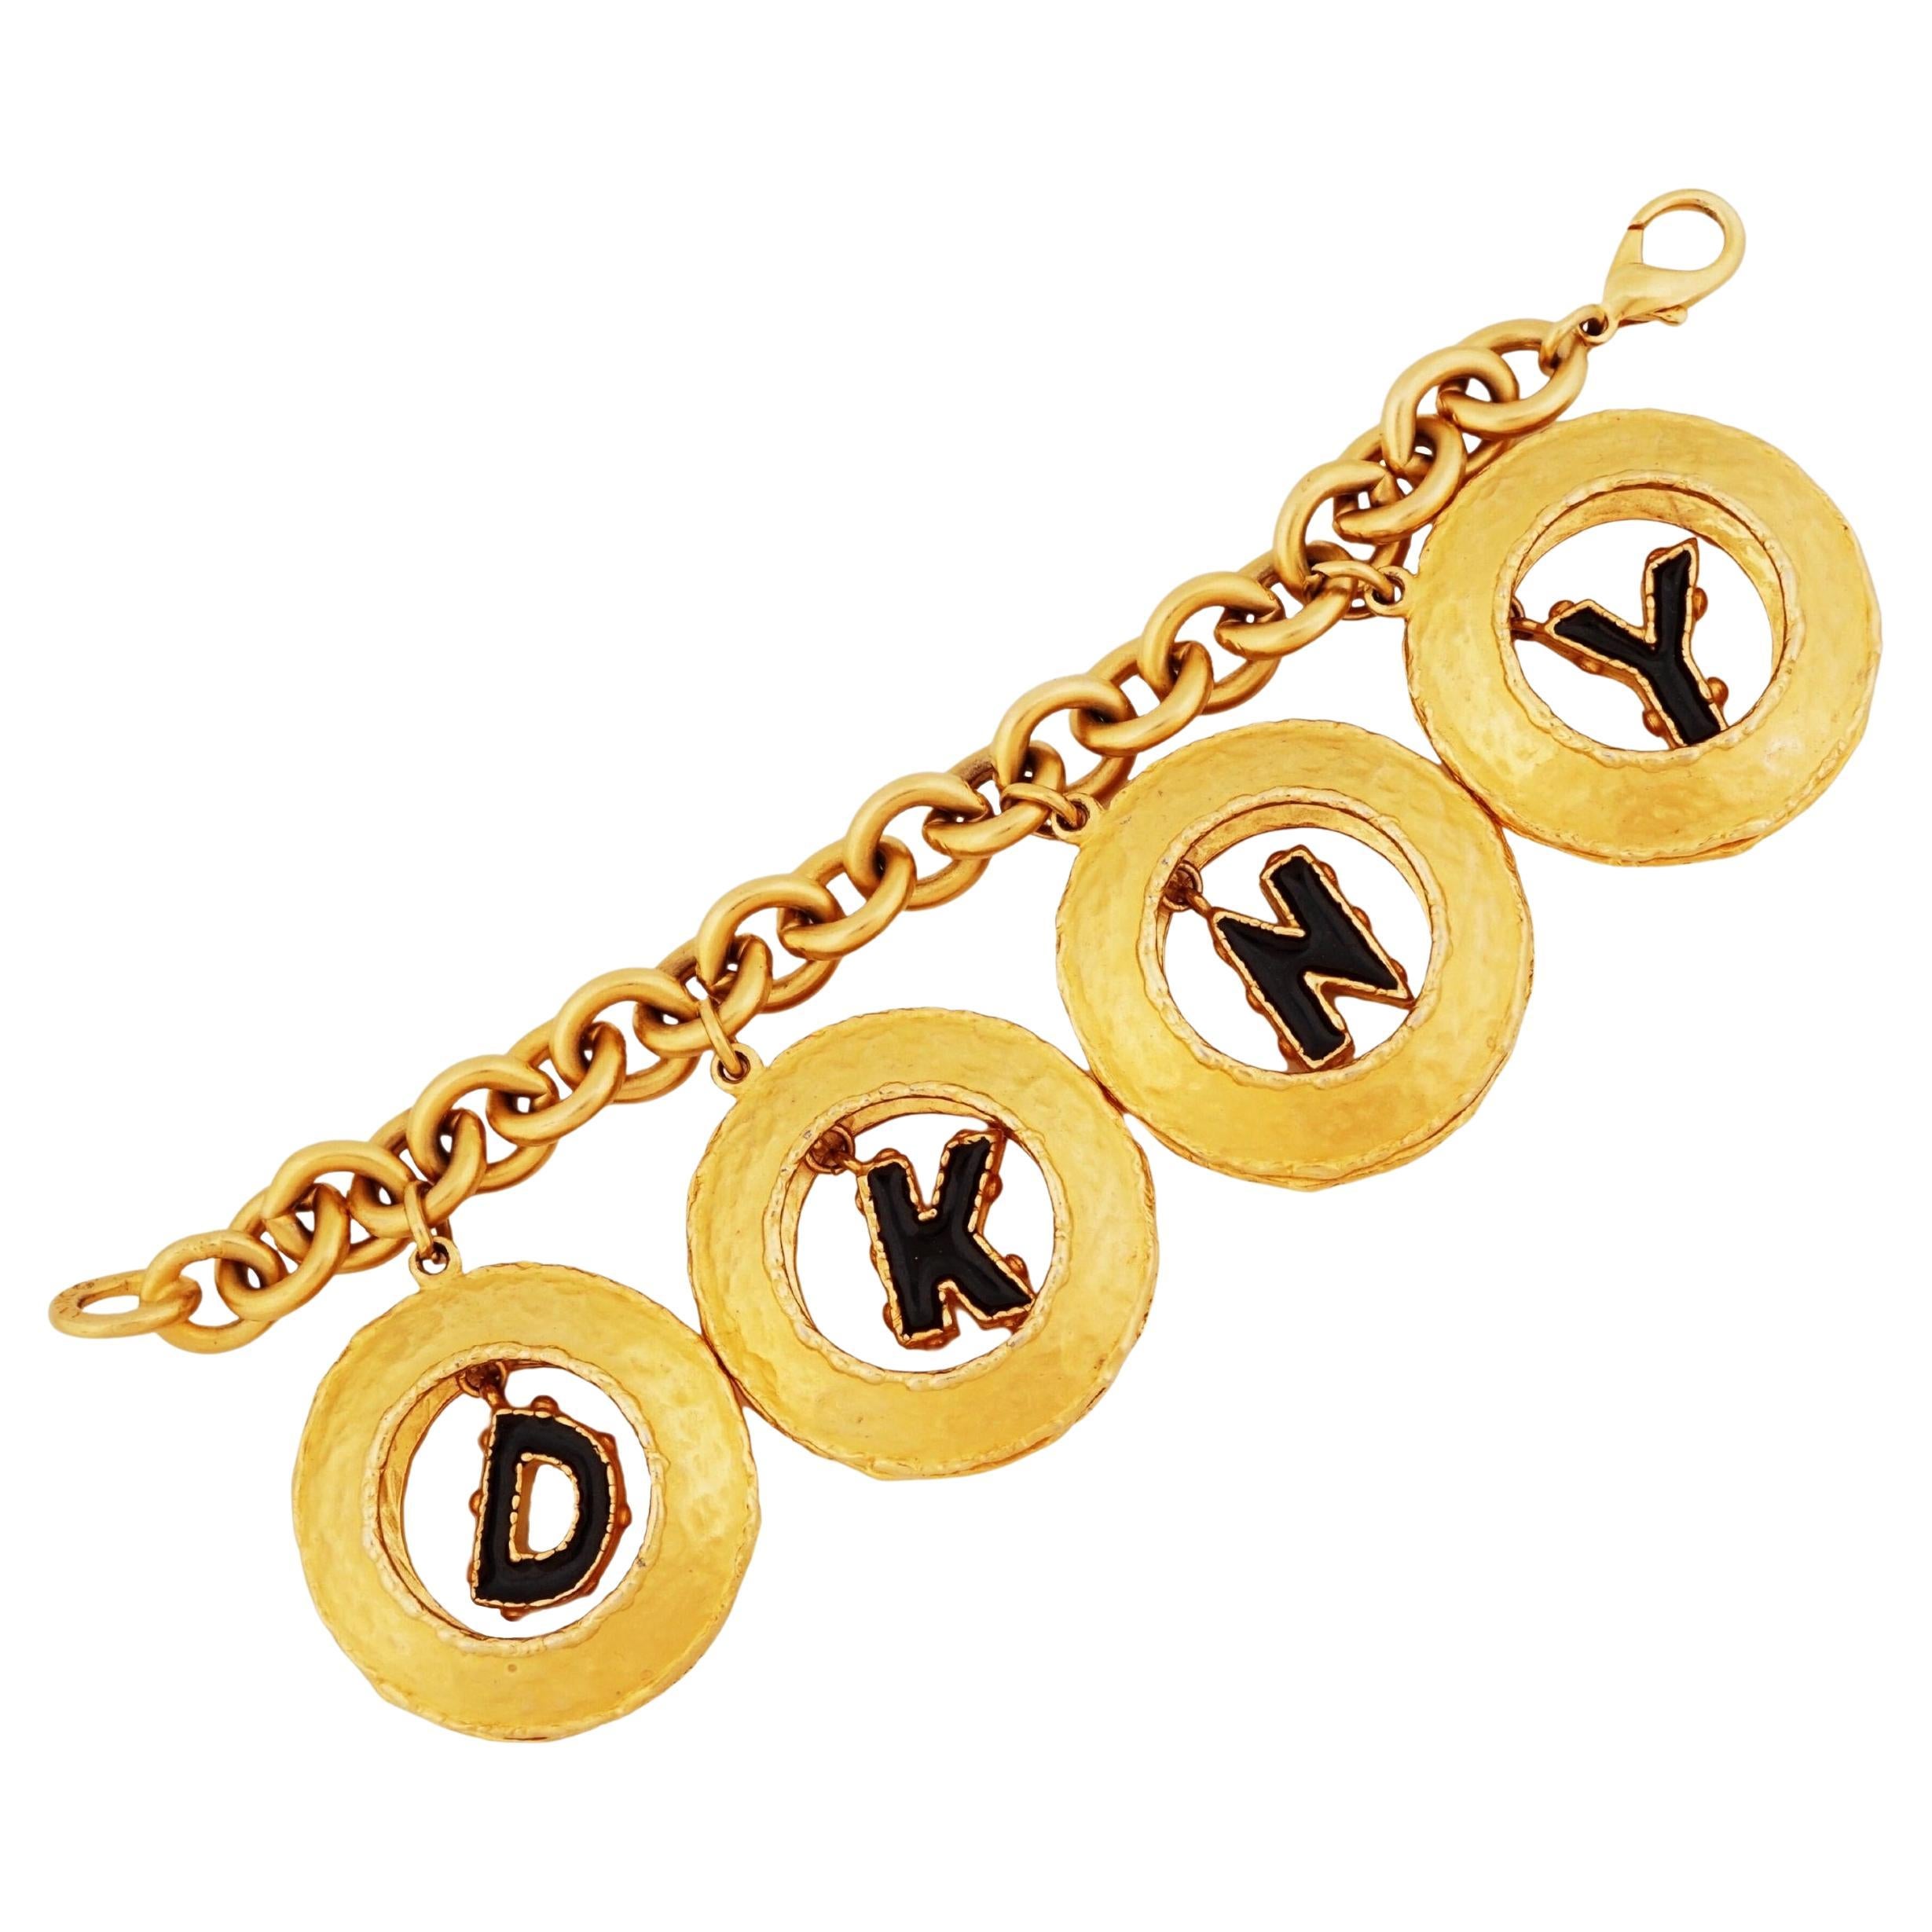 Extra Chunky Gilt Statement "DKNY" Charm Bracelet By Donna Karan, 1980s For Sale